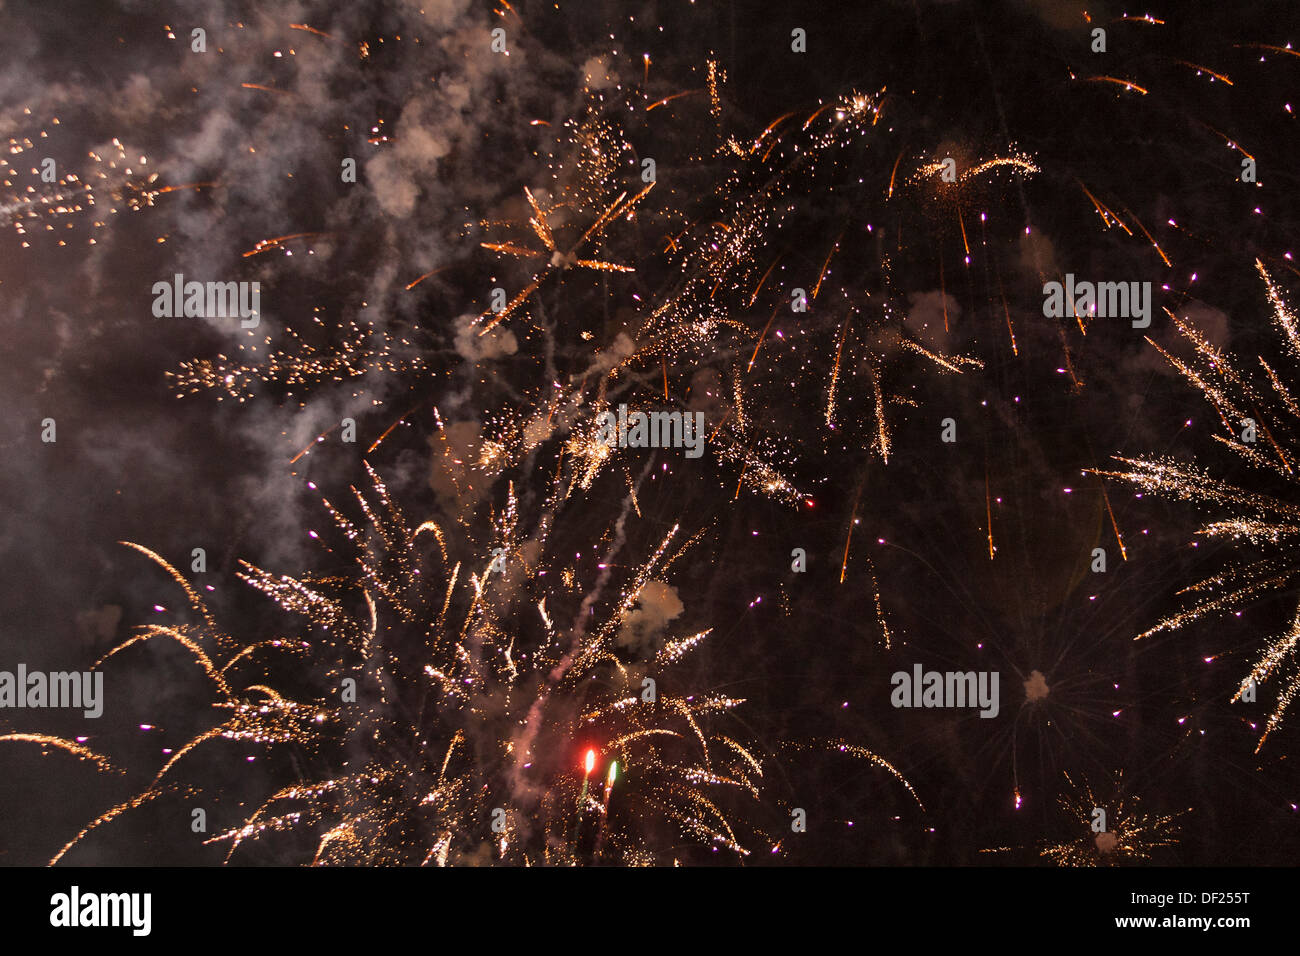 A bright burst of fireworks against black sky Stock Photo